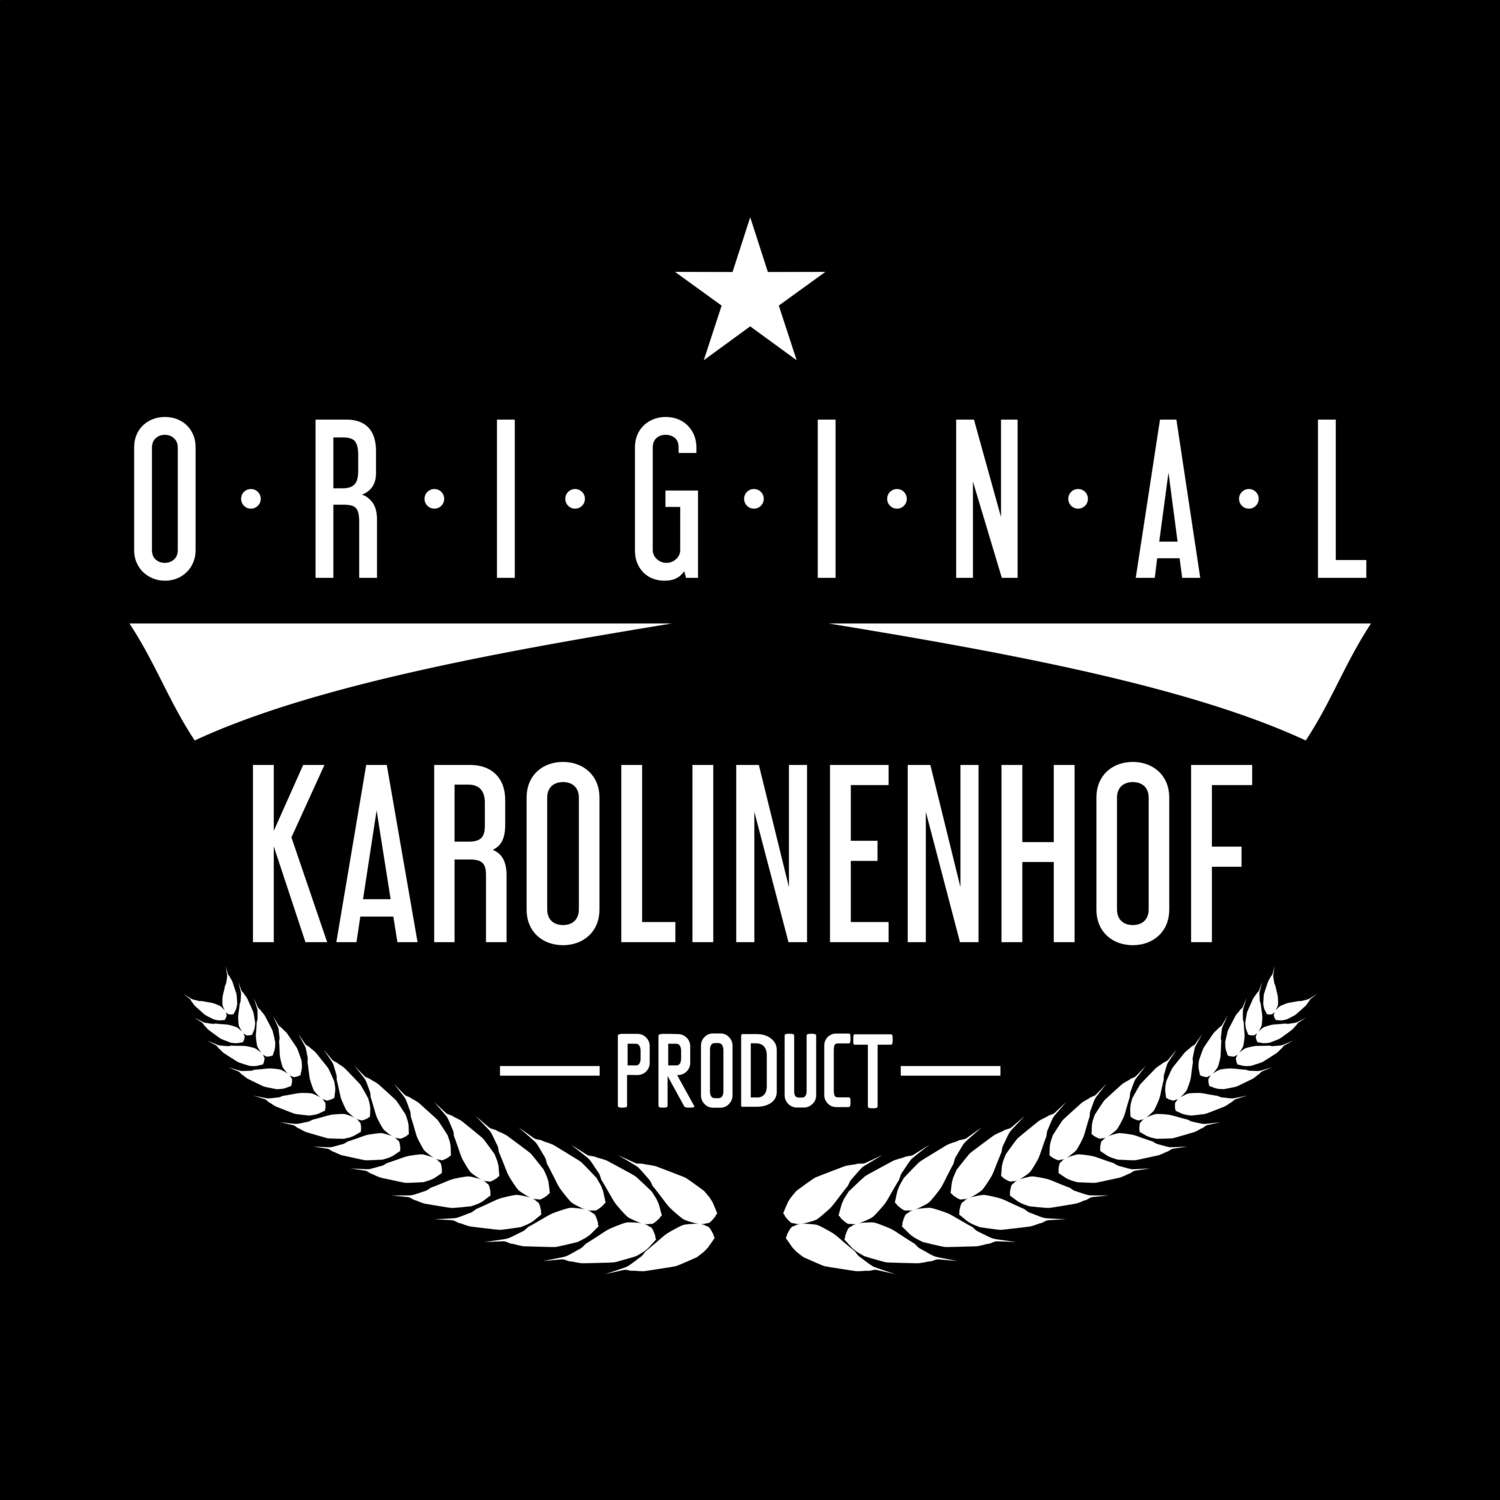 Karolinenhof T-Shirt »Original Product«